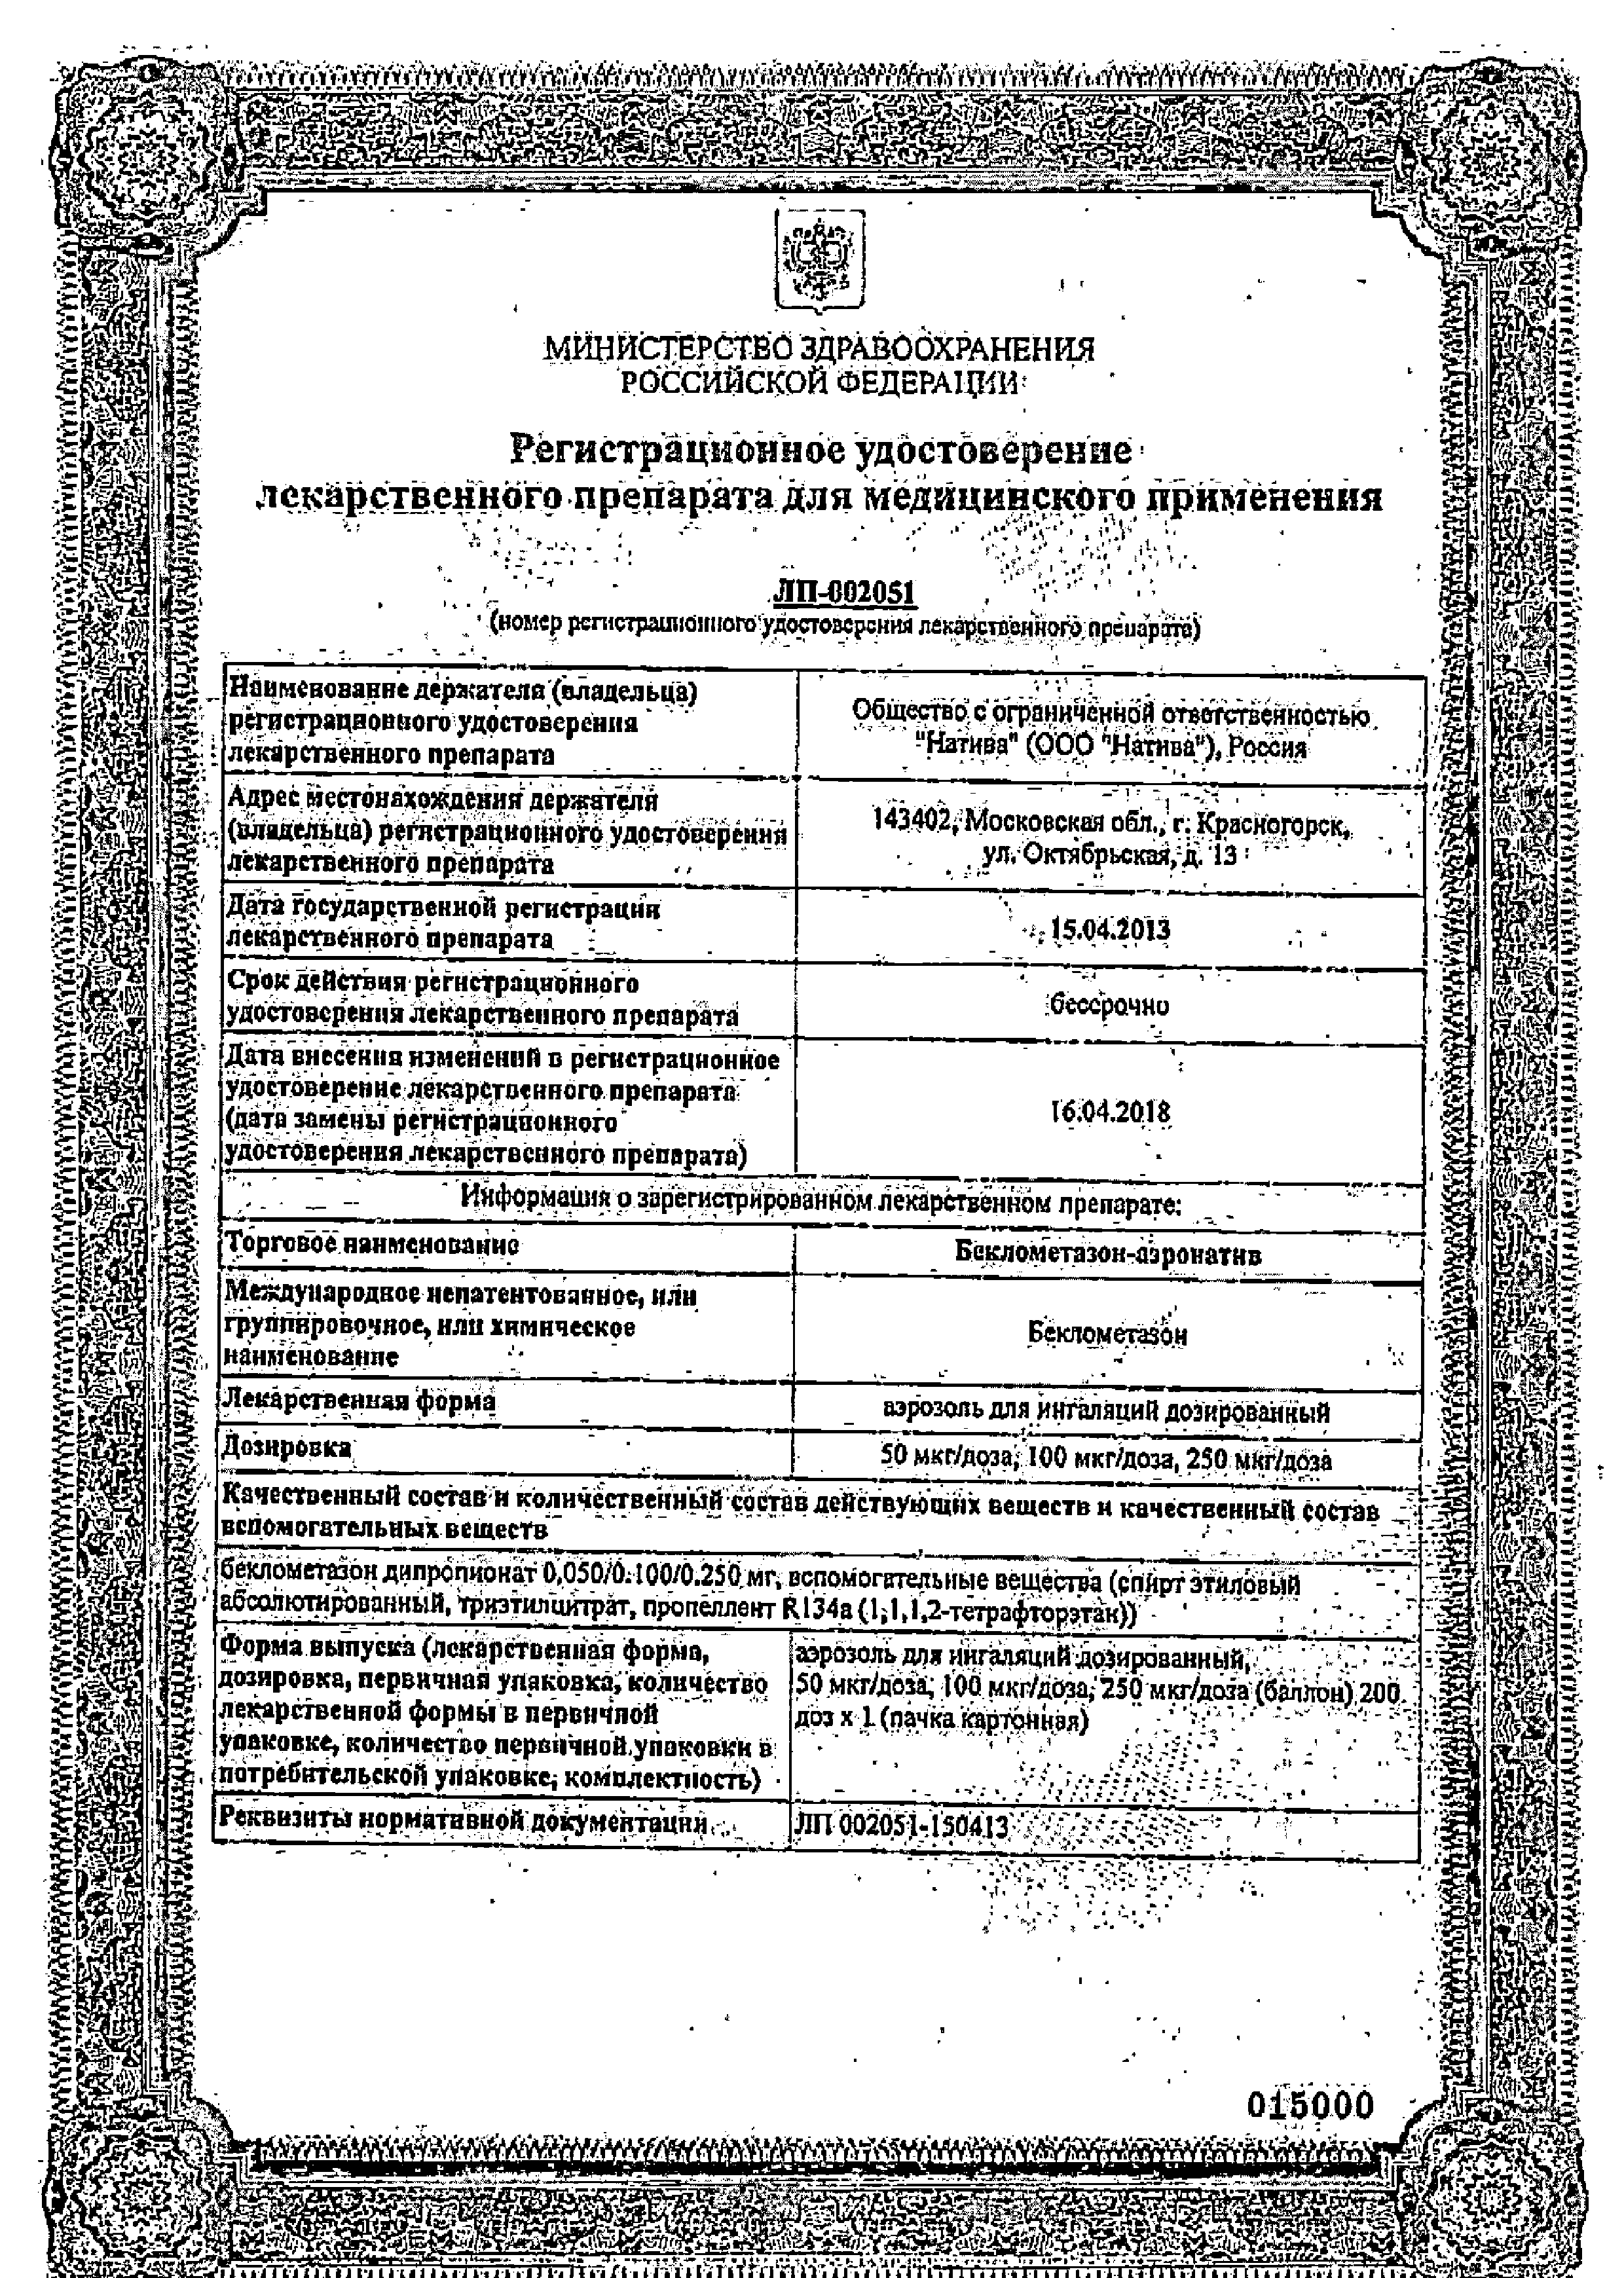 Беклометазон-аэронатив сертификат